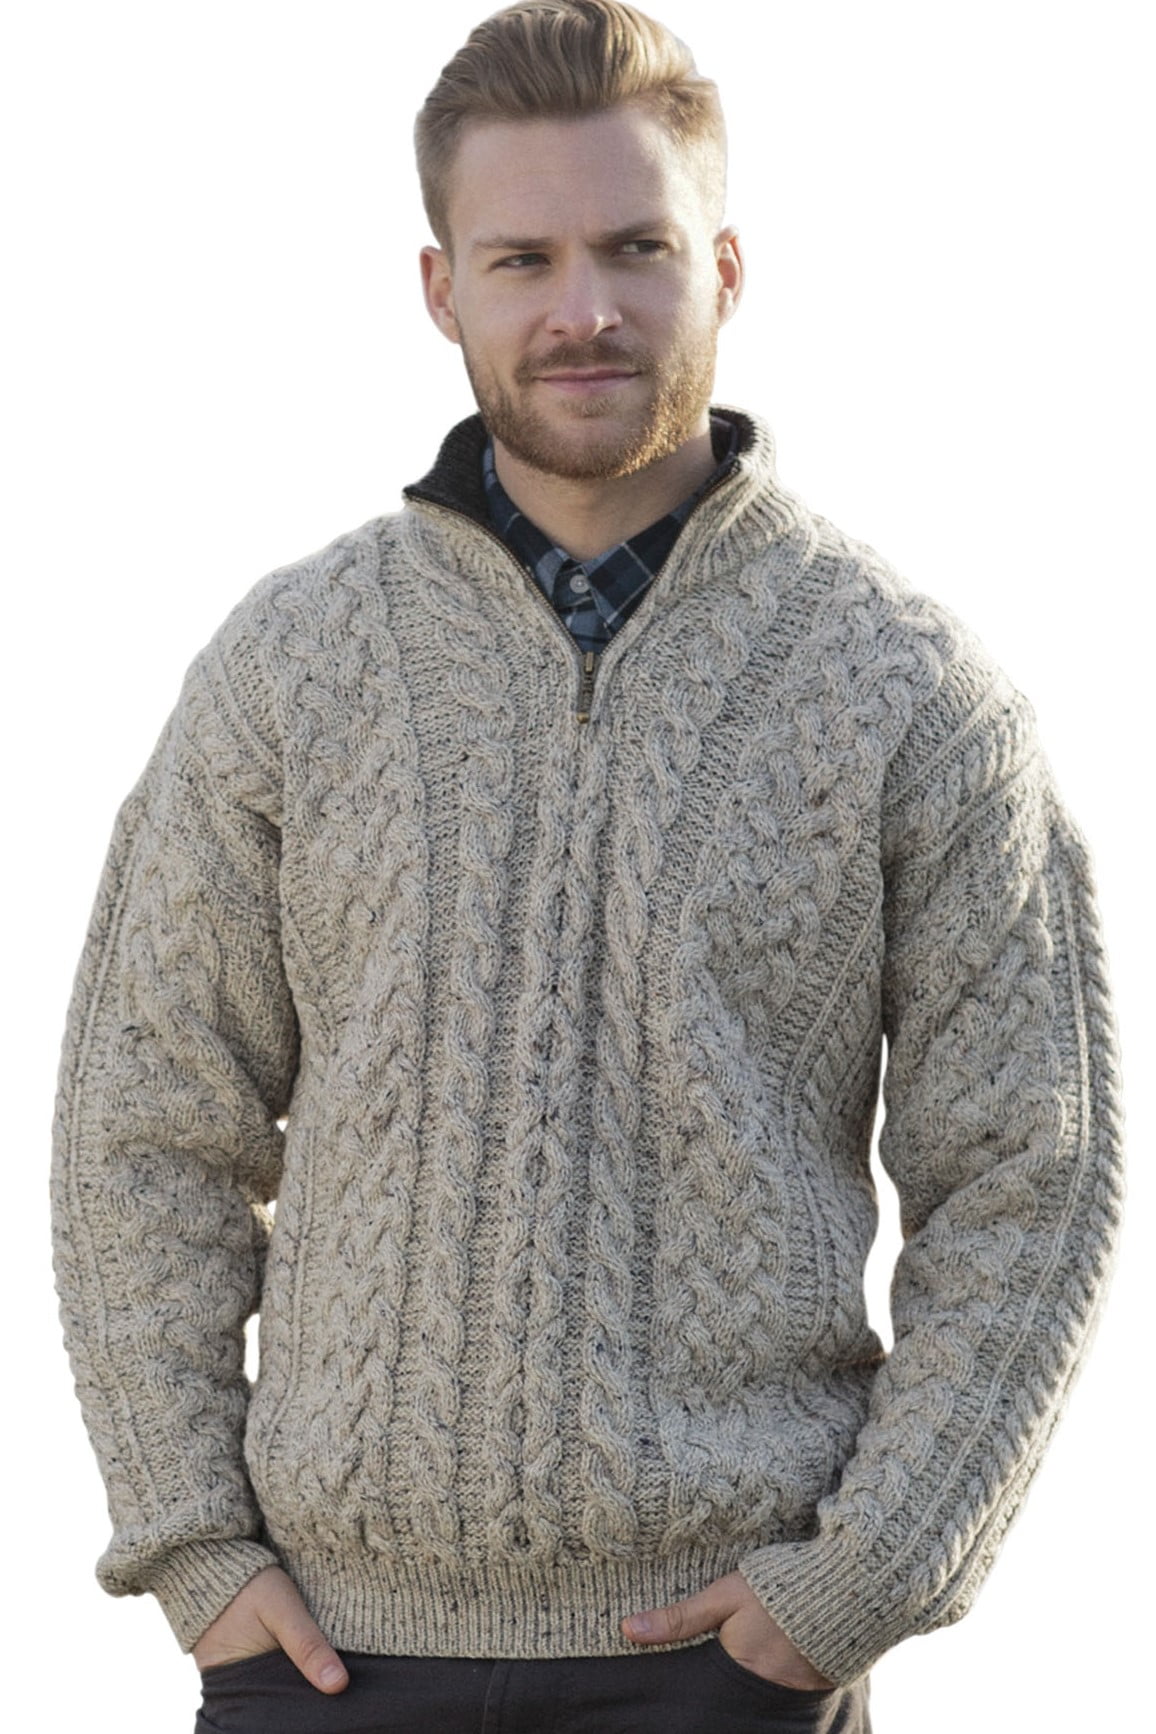 SAOL - Aran Quarter Zip Sweater 100% Soft Merino Wool Made in Ireland ...